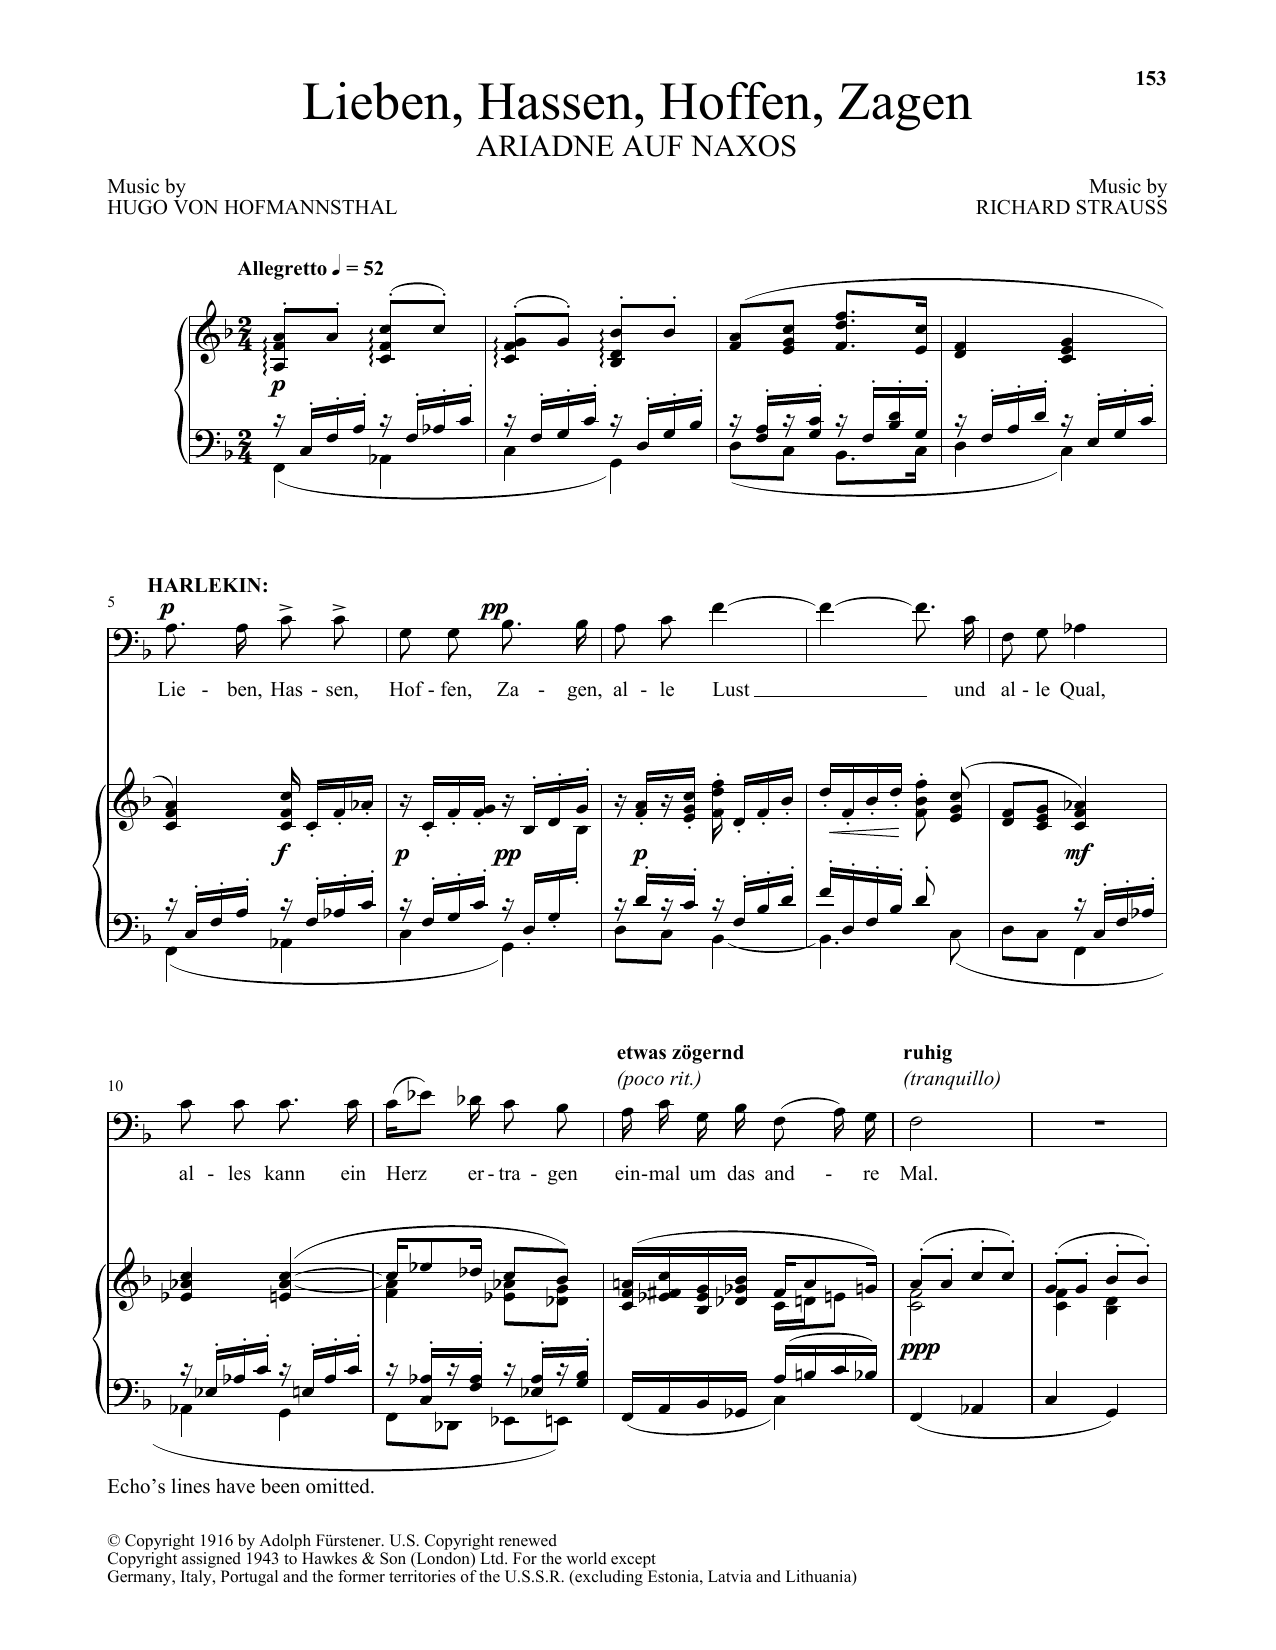 Download Richard Strauss Lieben, Hassen, Hoffen, Zagen Sheet Music